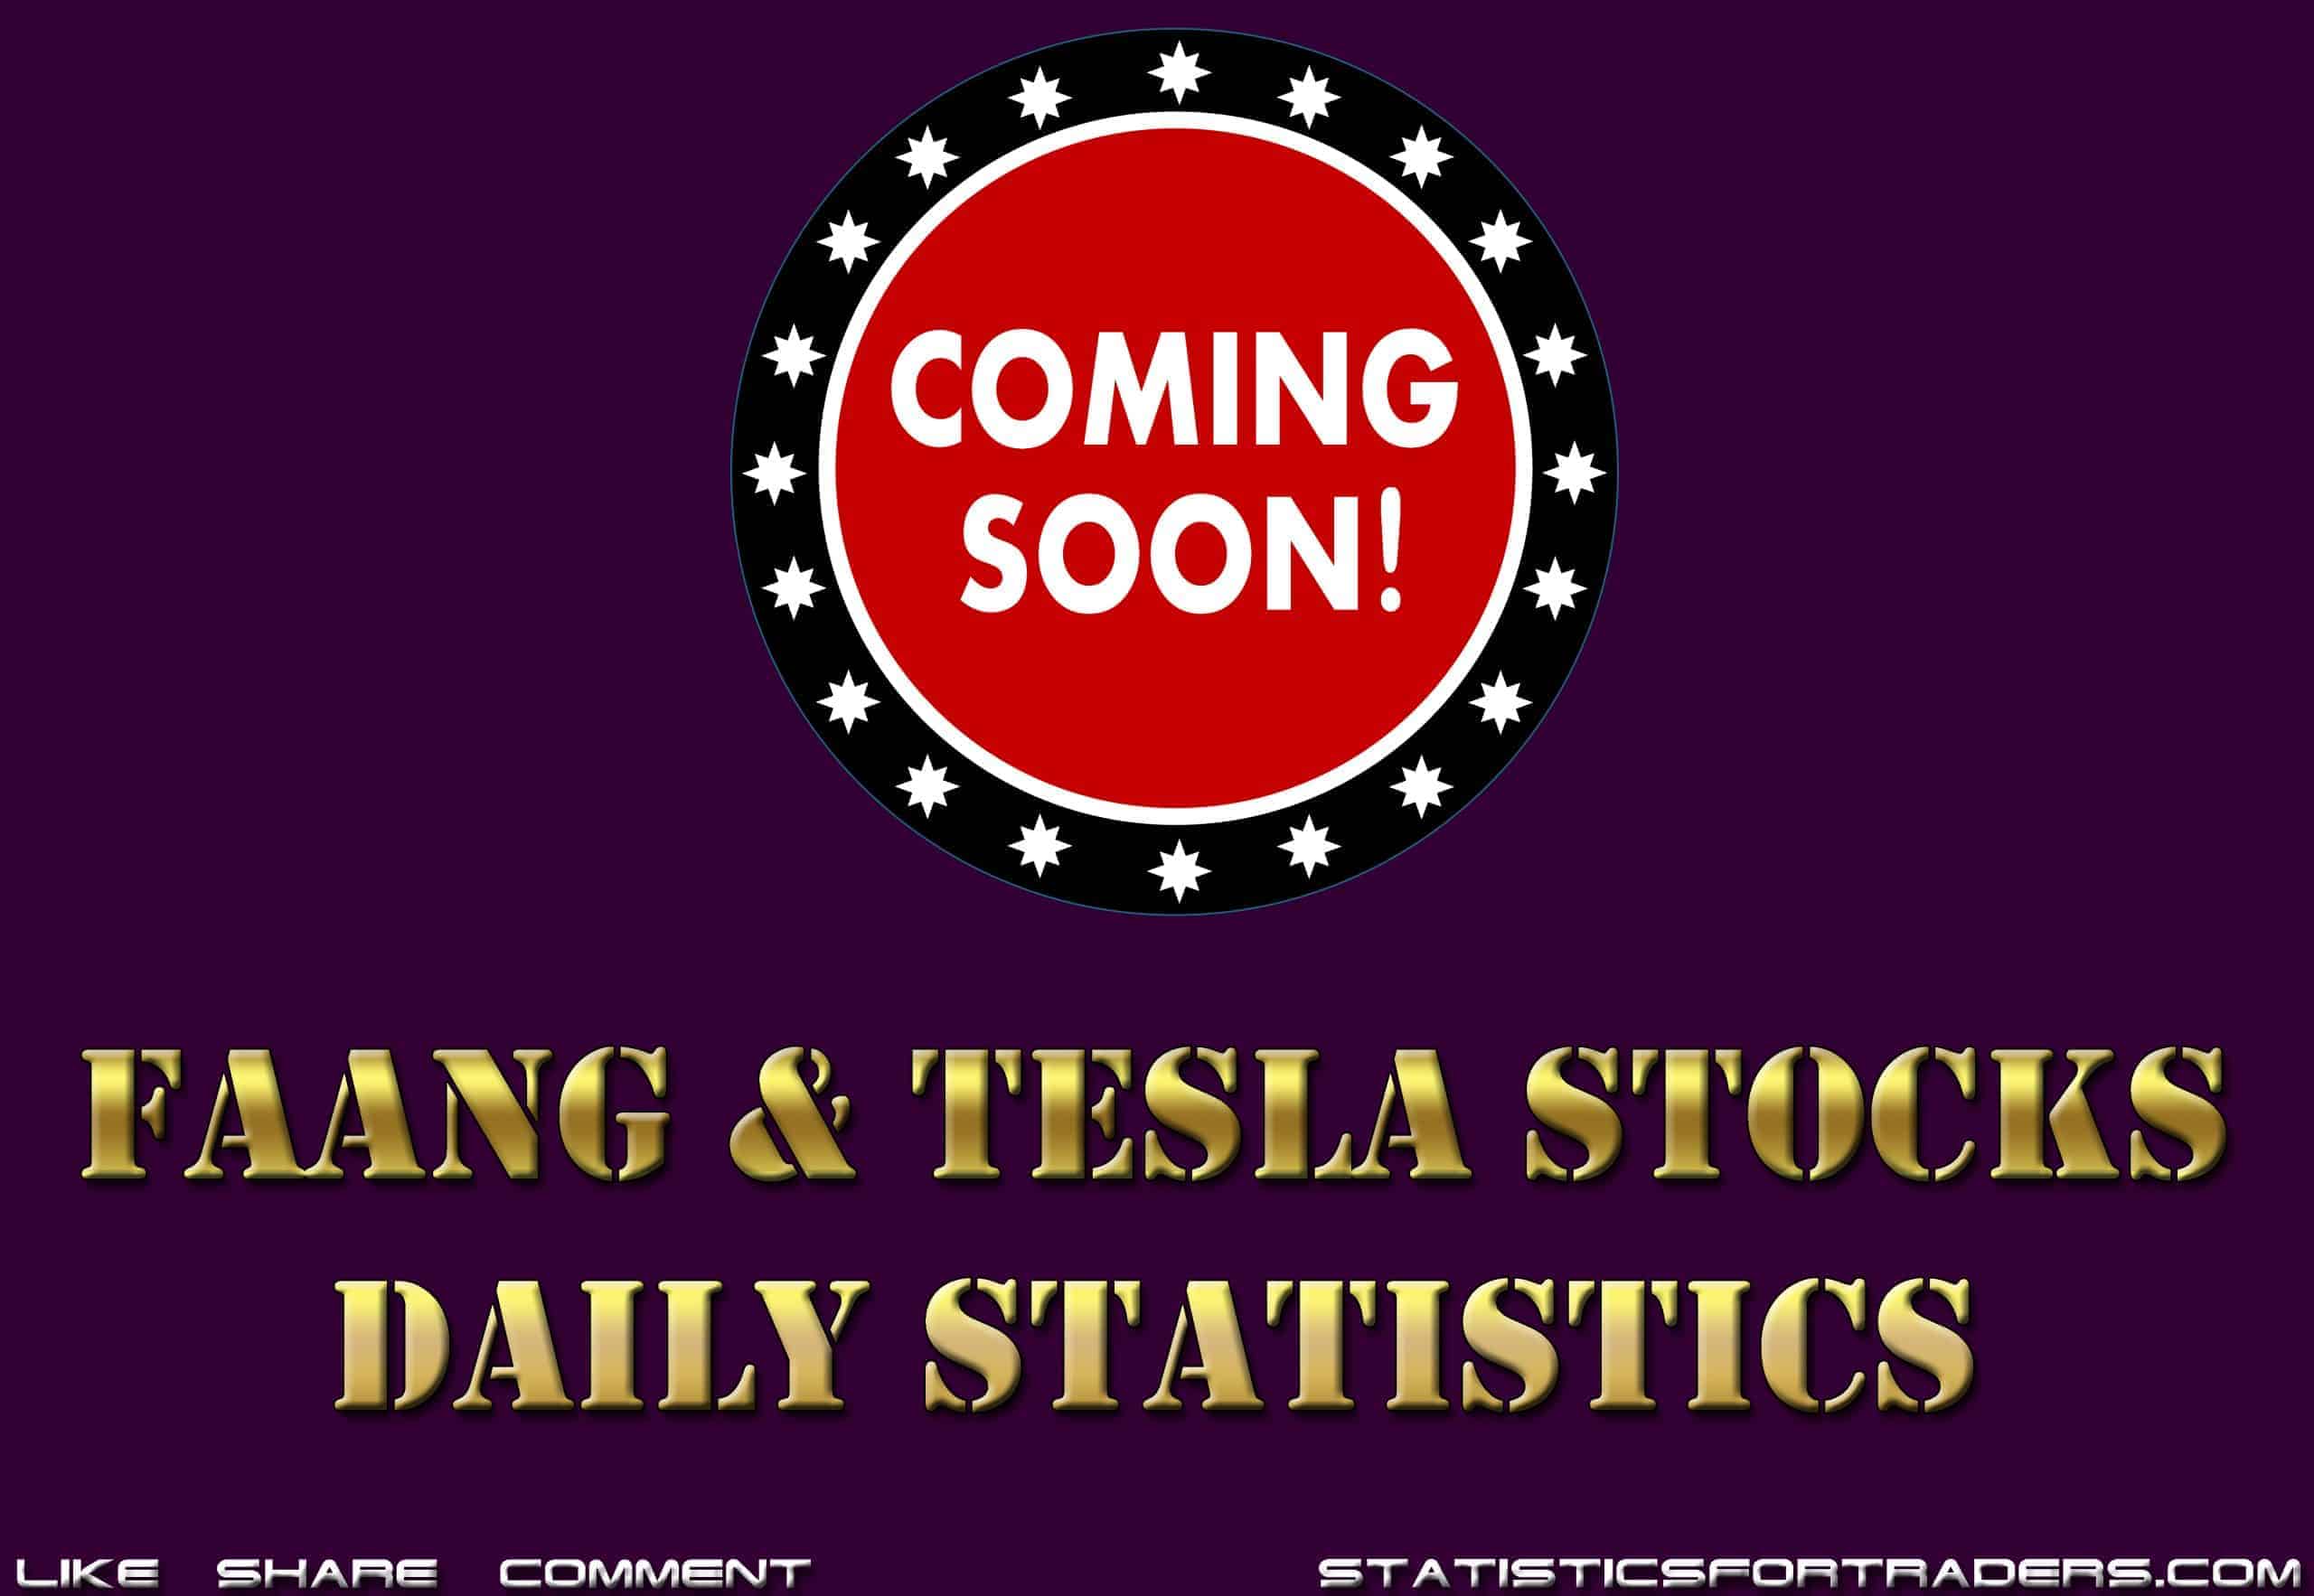 FAANG + Tesla daily statistics incoming!